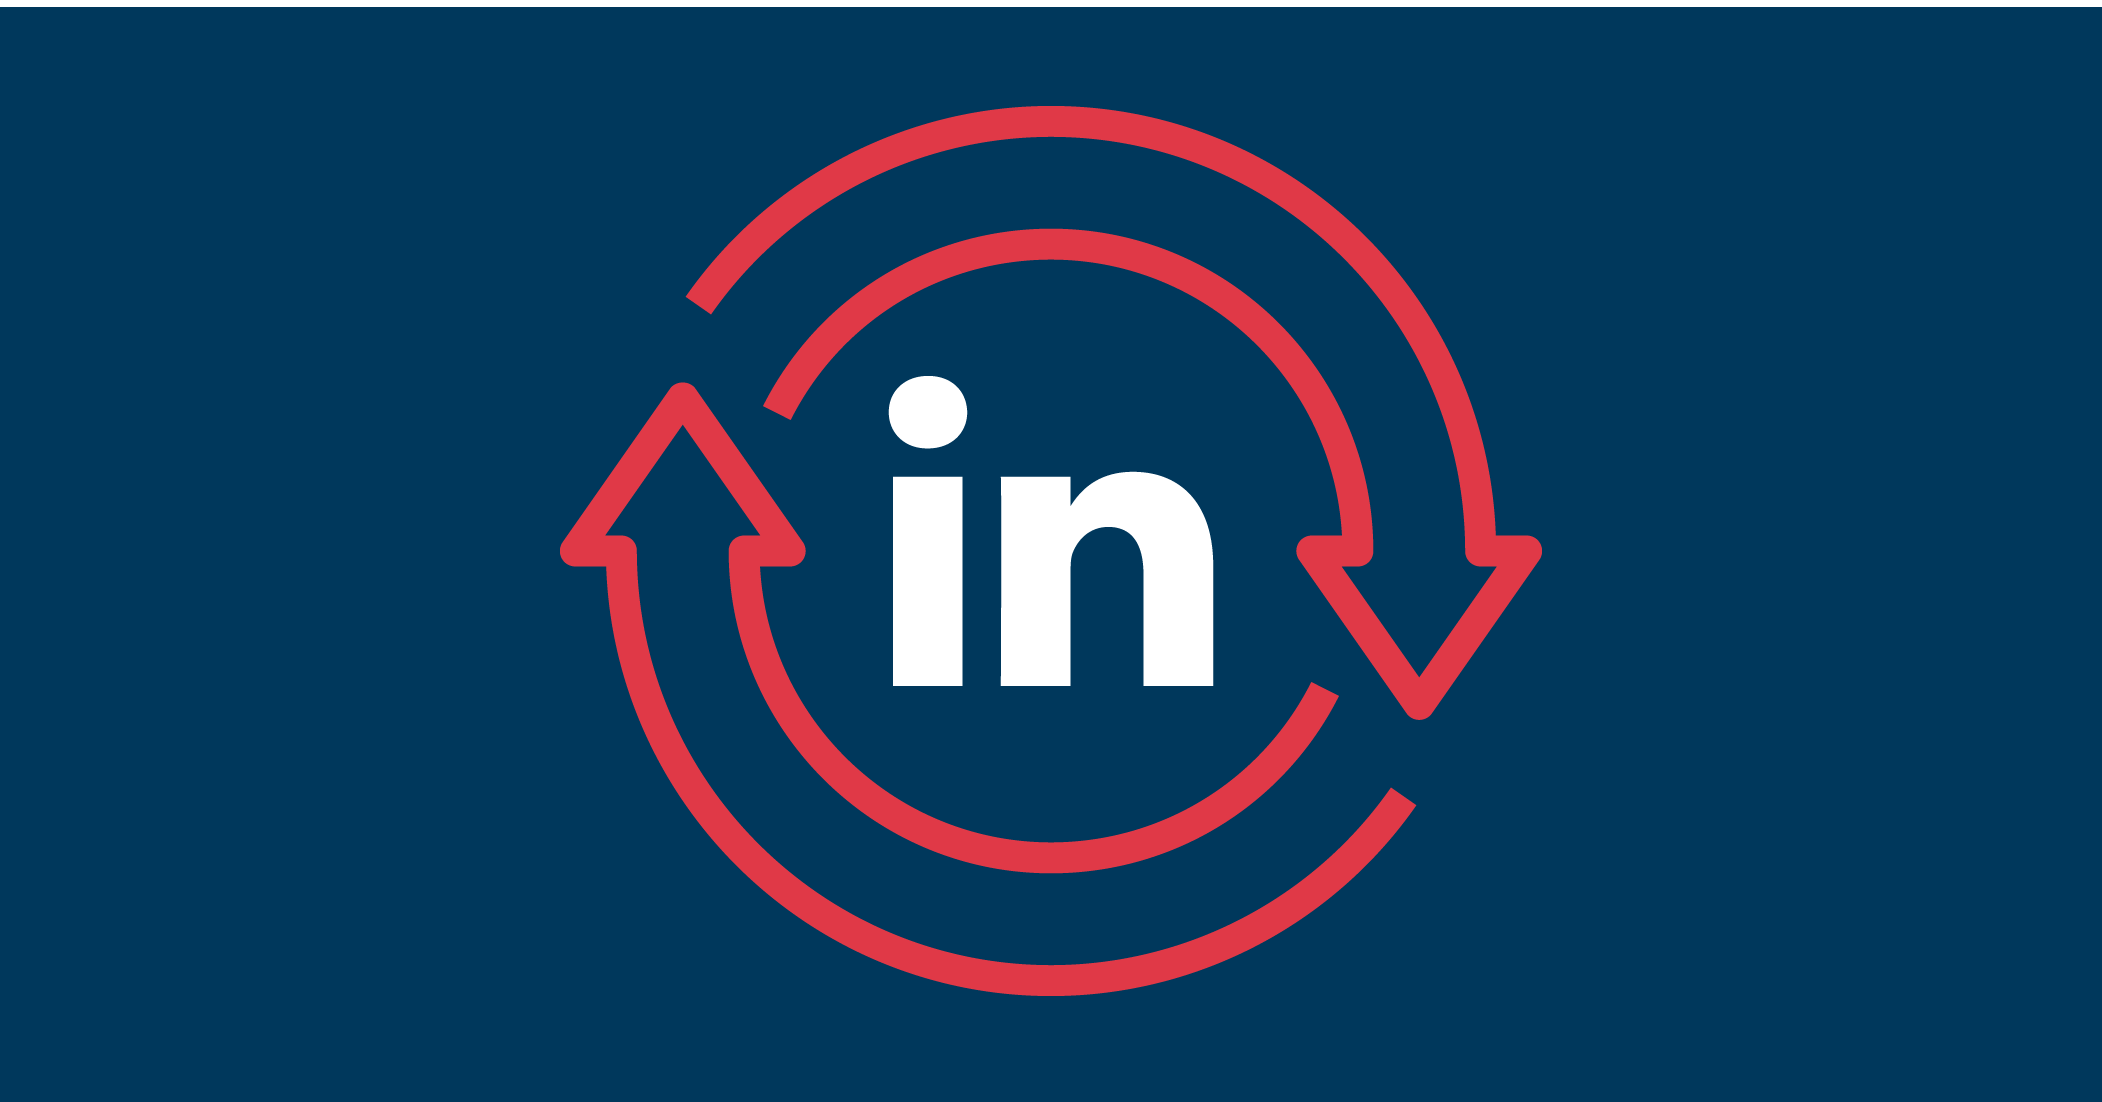 11. Update your LinkedIn profile